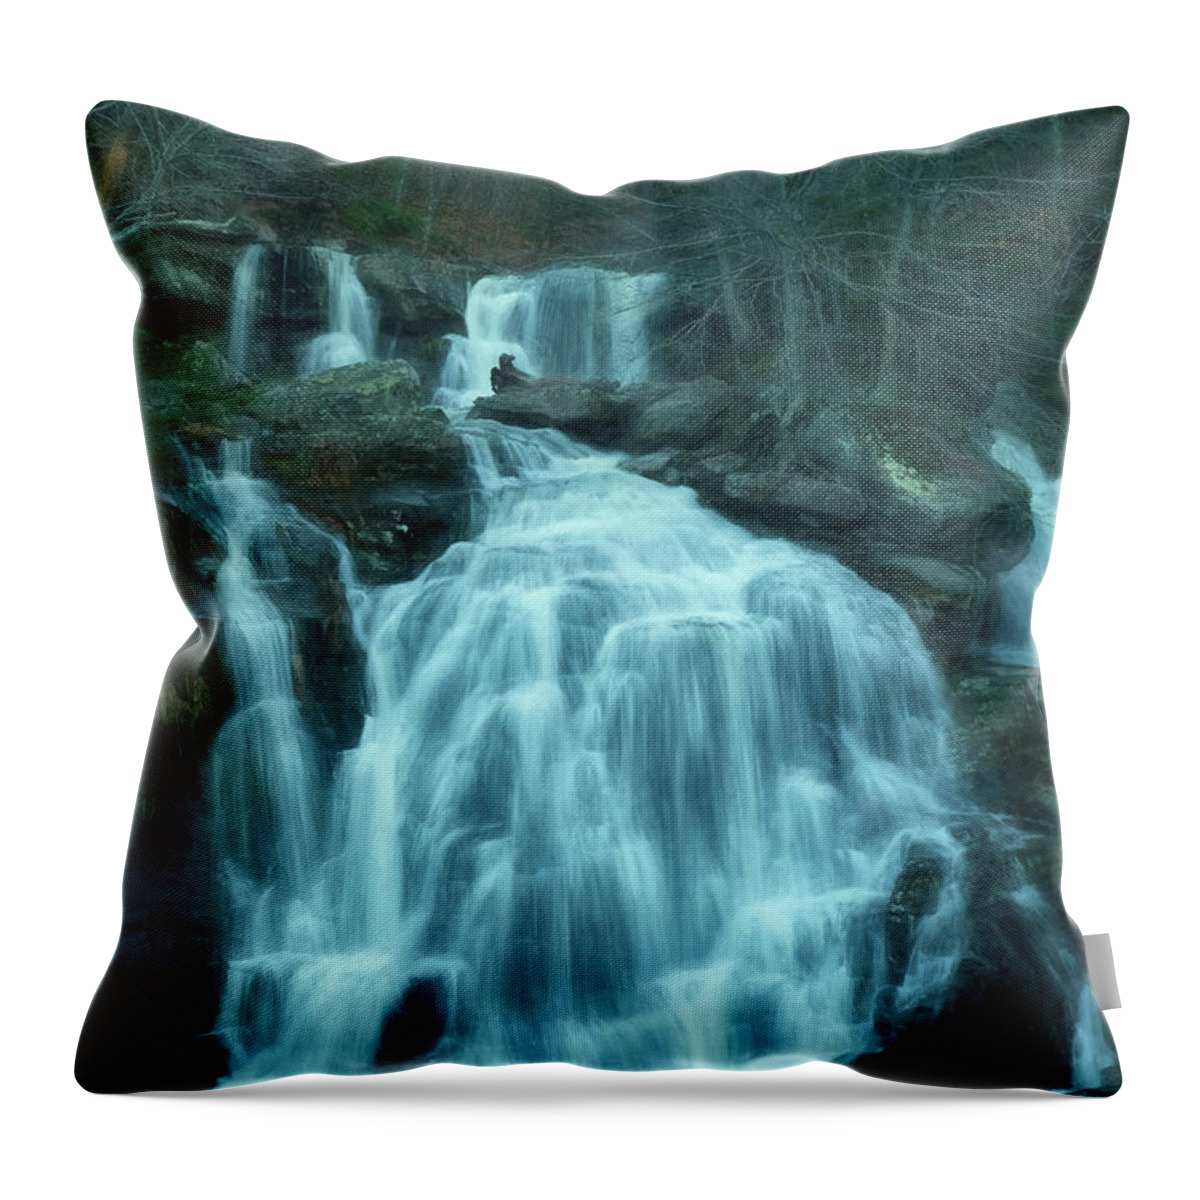 Waterfall Throw Pillow featuring the photograph Bastian Falls by Nancy De Flon